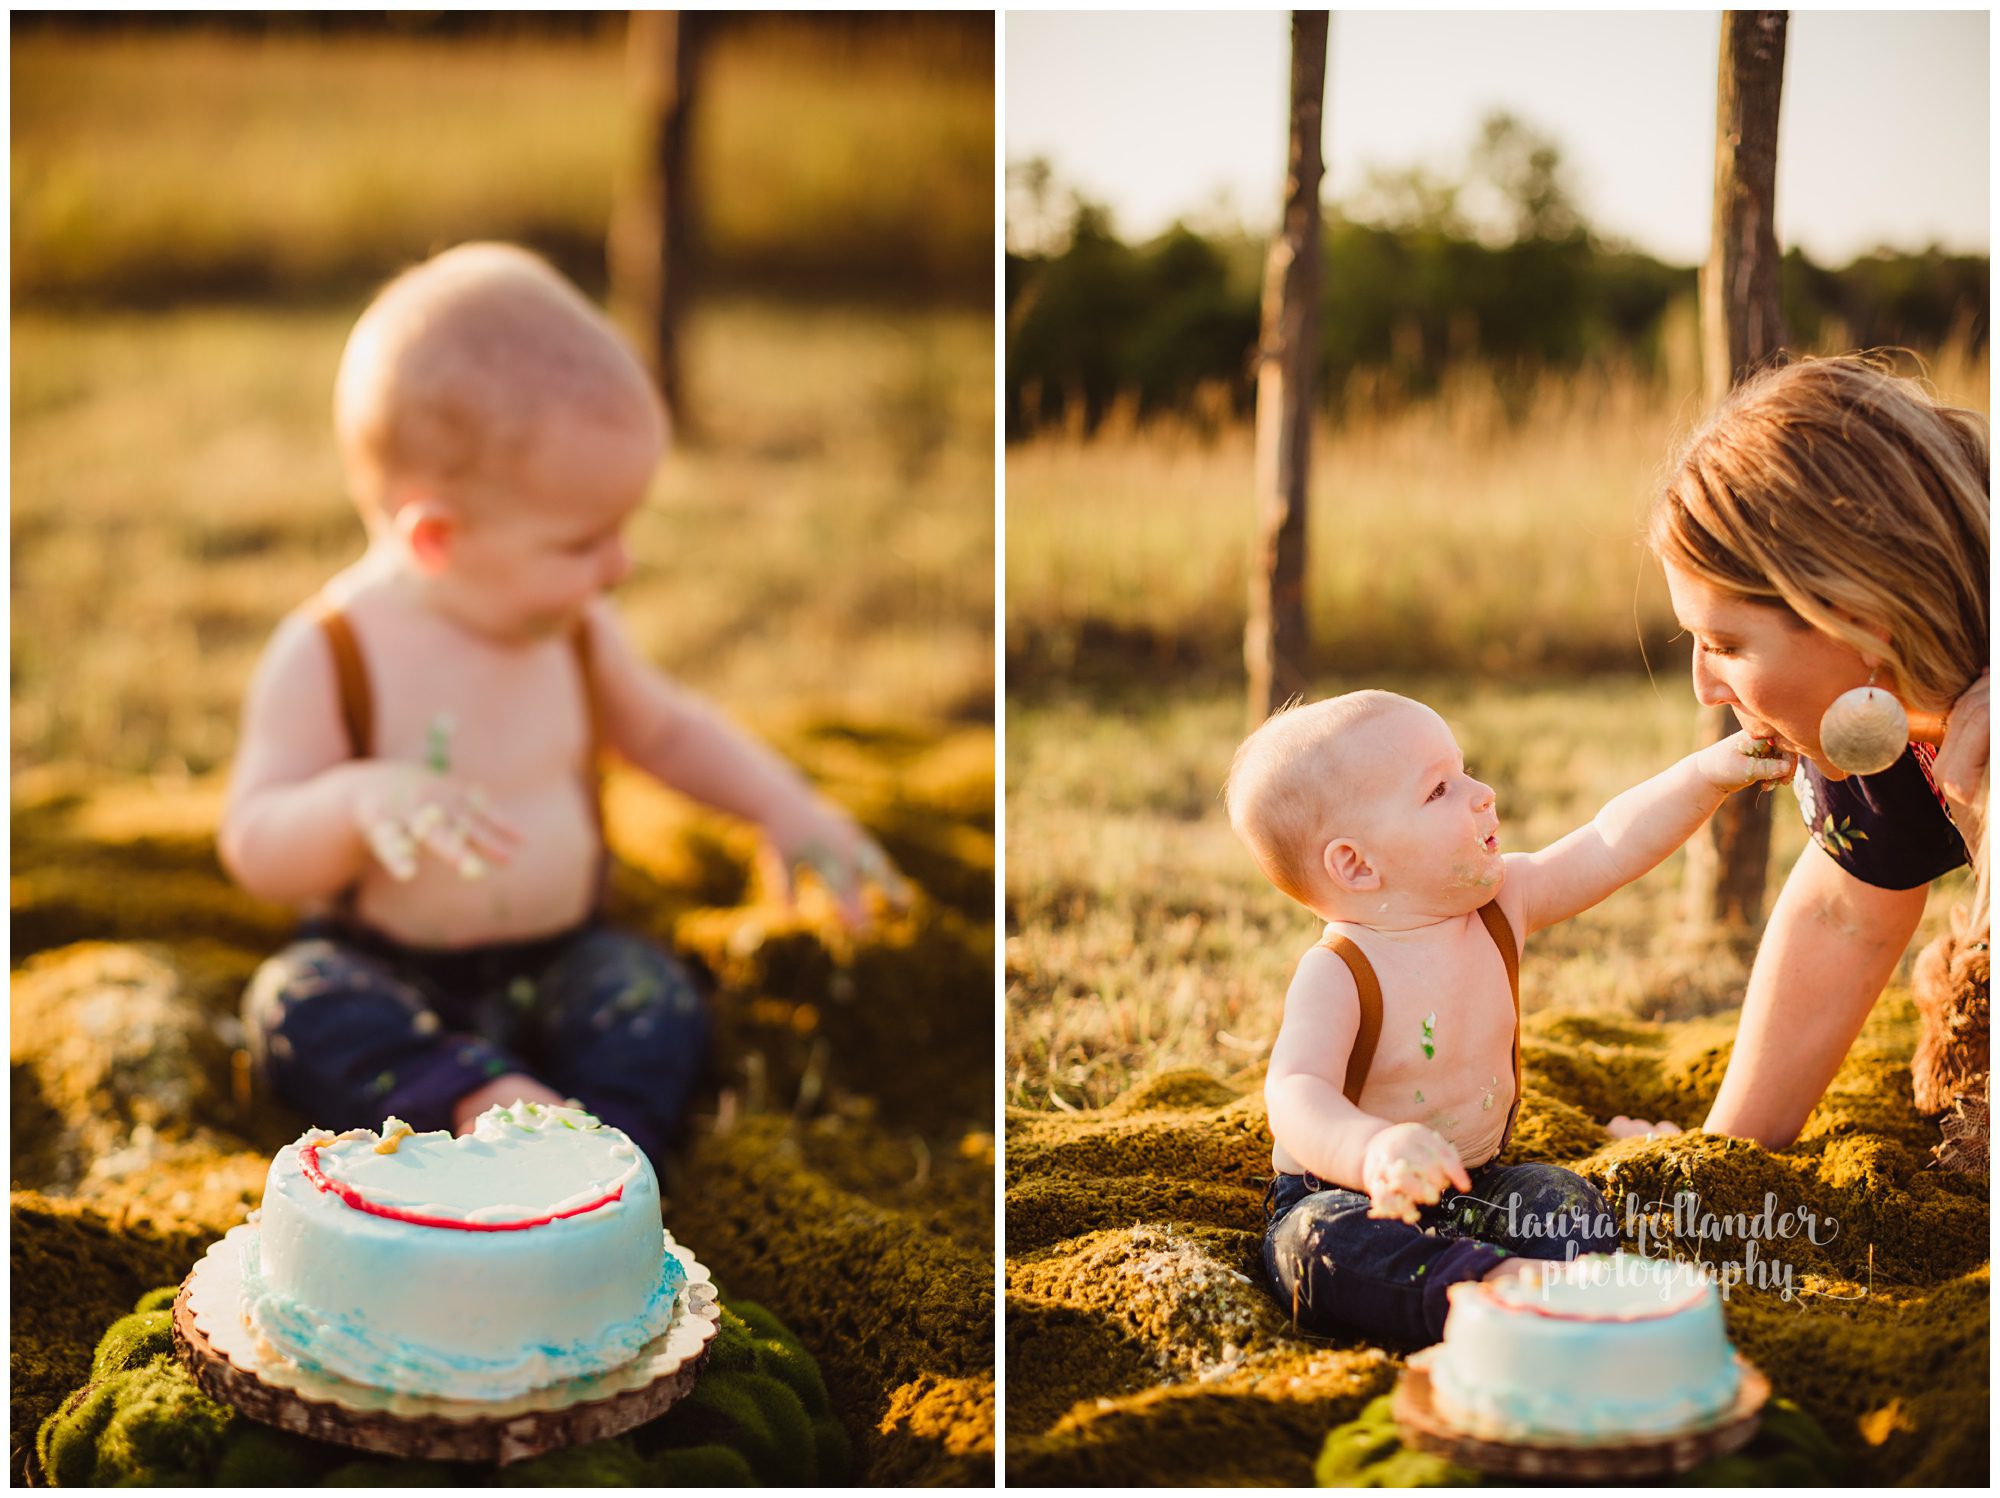 one year milestone, cake smash, field, Laura Hollander Photography, Battle Creek, MI